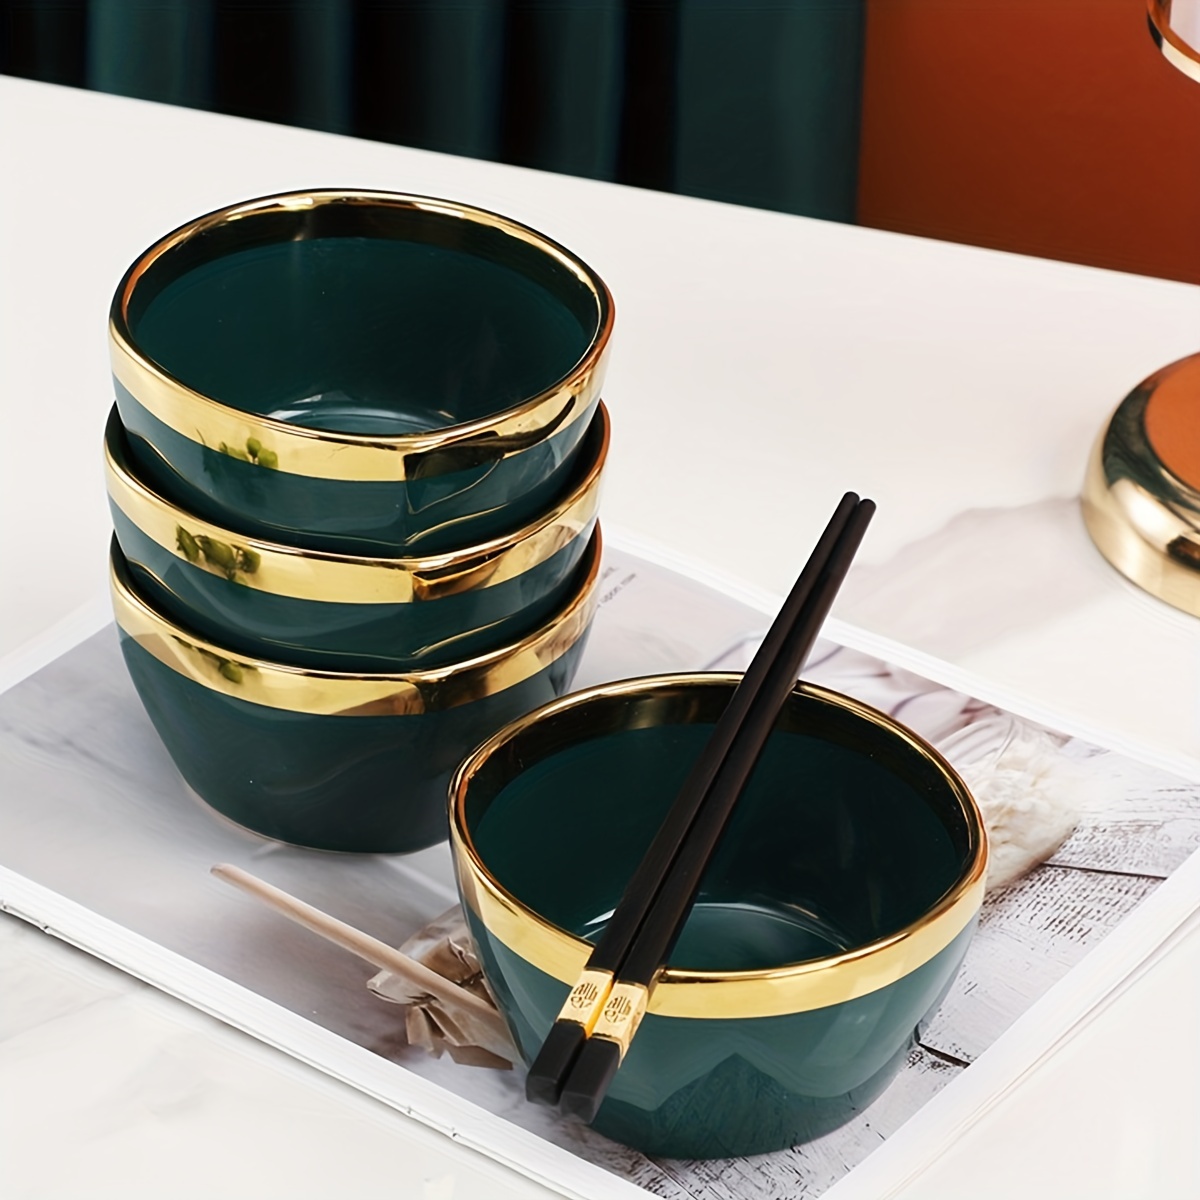 Creative Rice Bowl Set - Cute Plastic Bowls For Salad, Yogurt